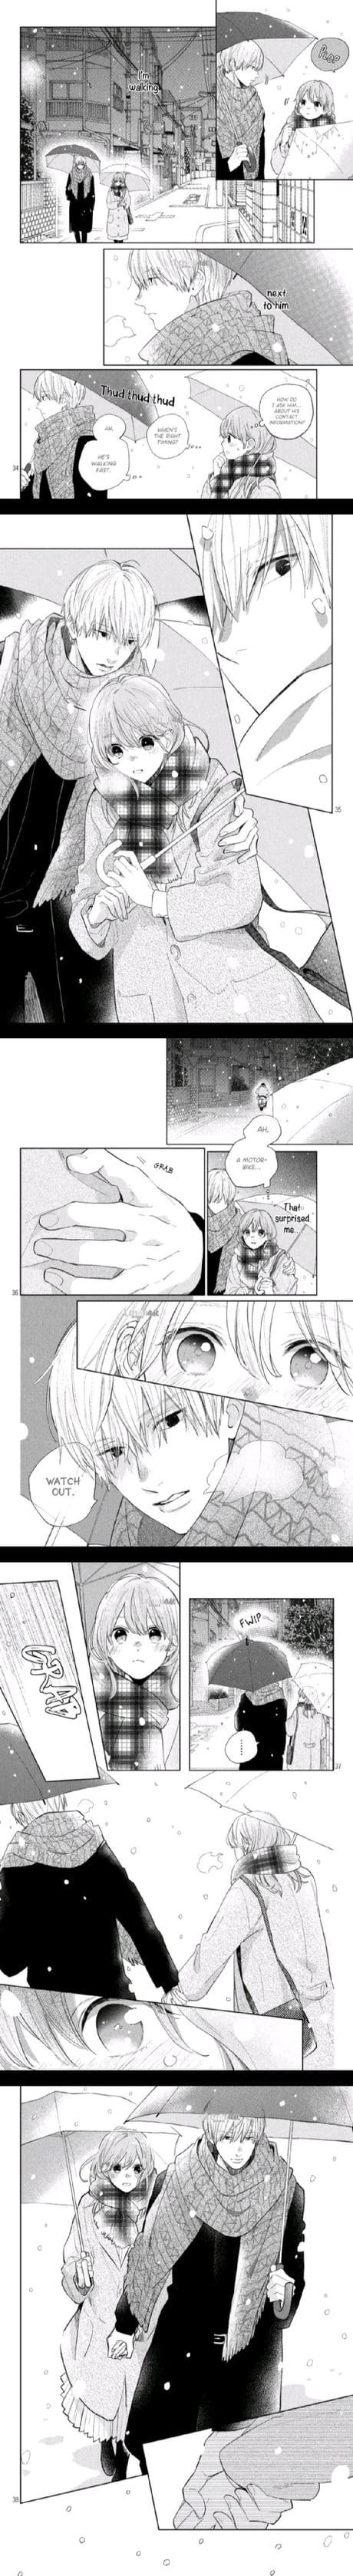 Yubisaki to Renren A Sign of Affection  Manga  MyAnimeListnet